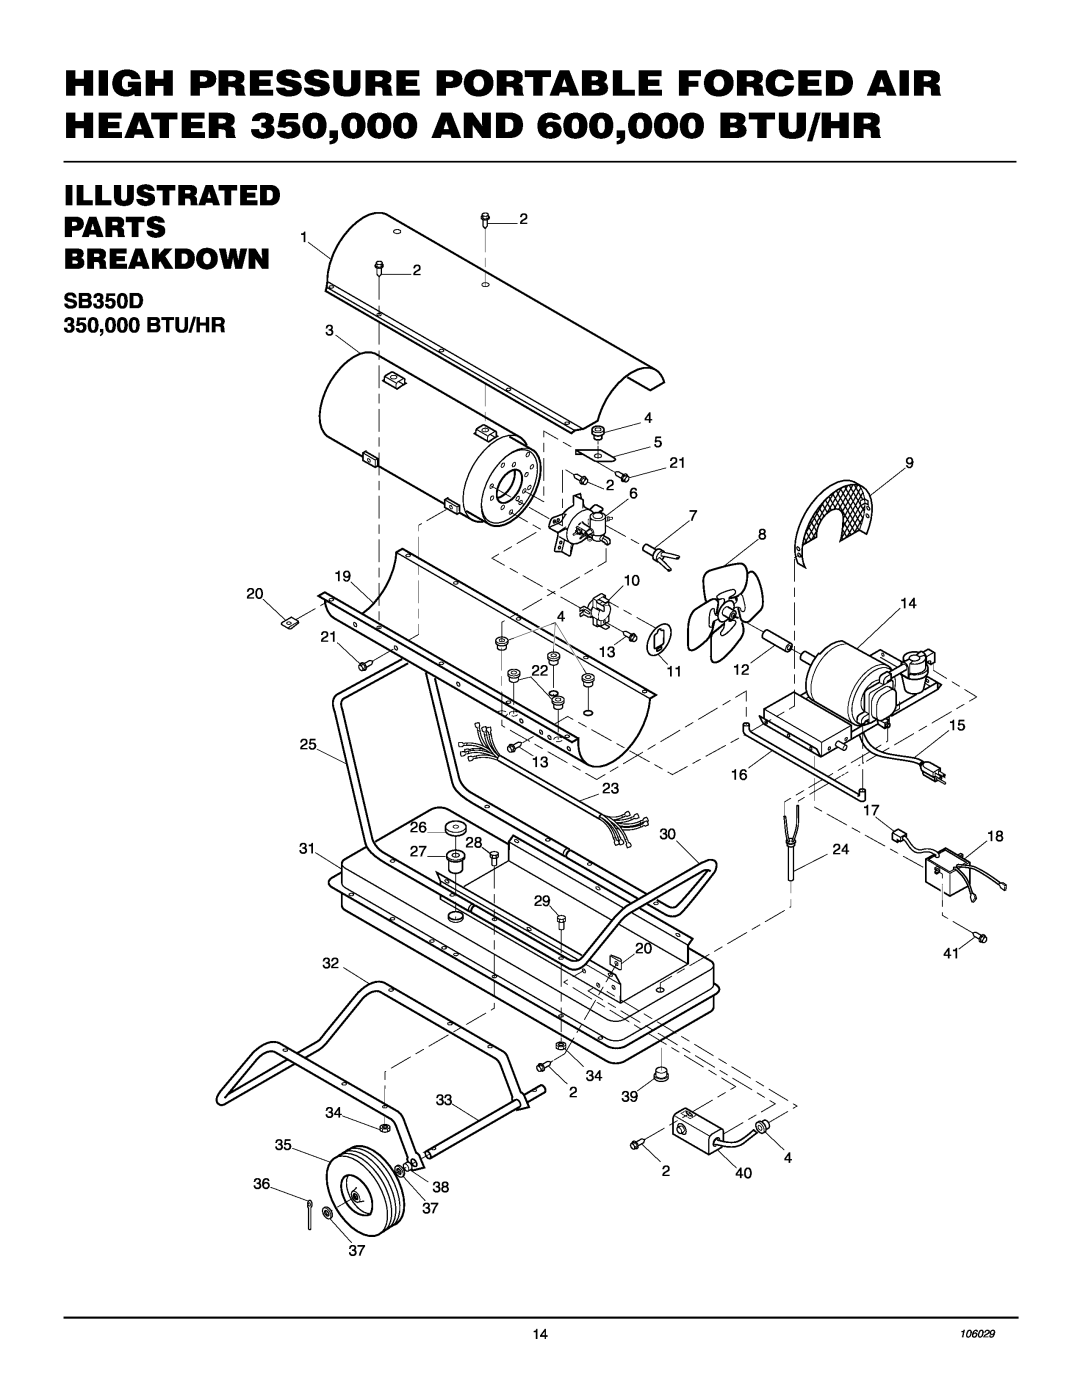 Desa SB600D owner manual Illustrated Parts Breakdown, SB350D 350,000 BTU/HR 